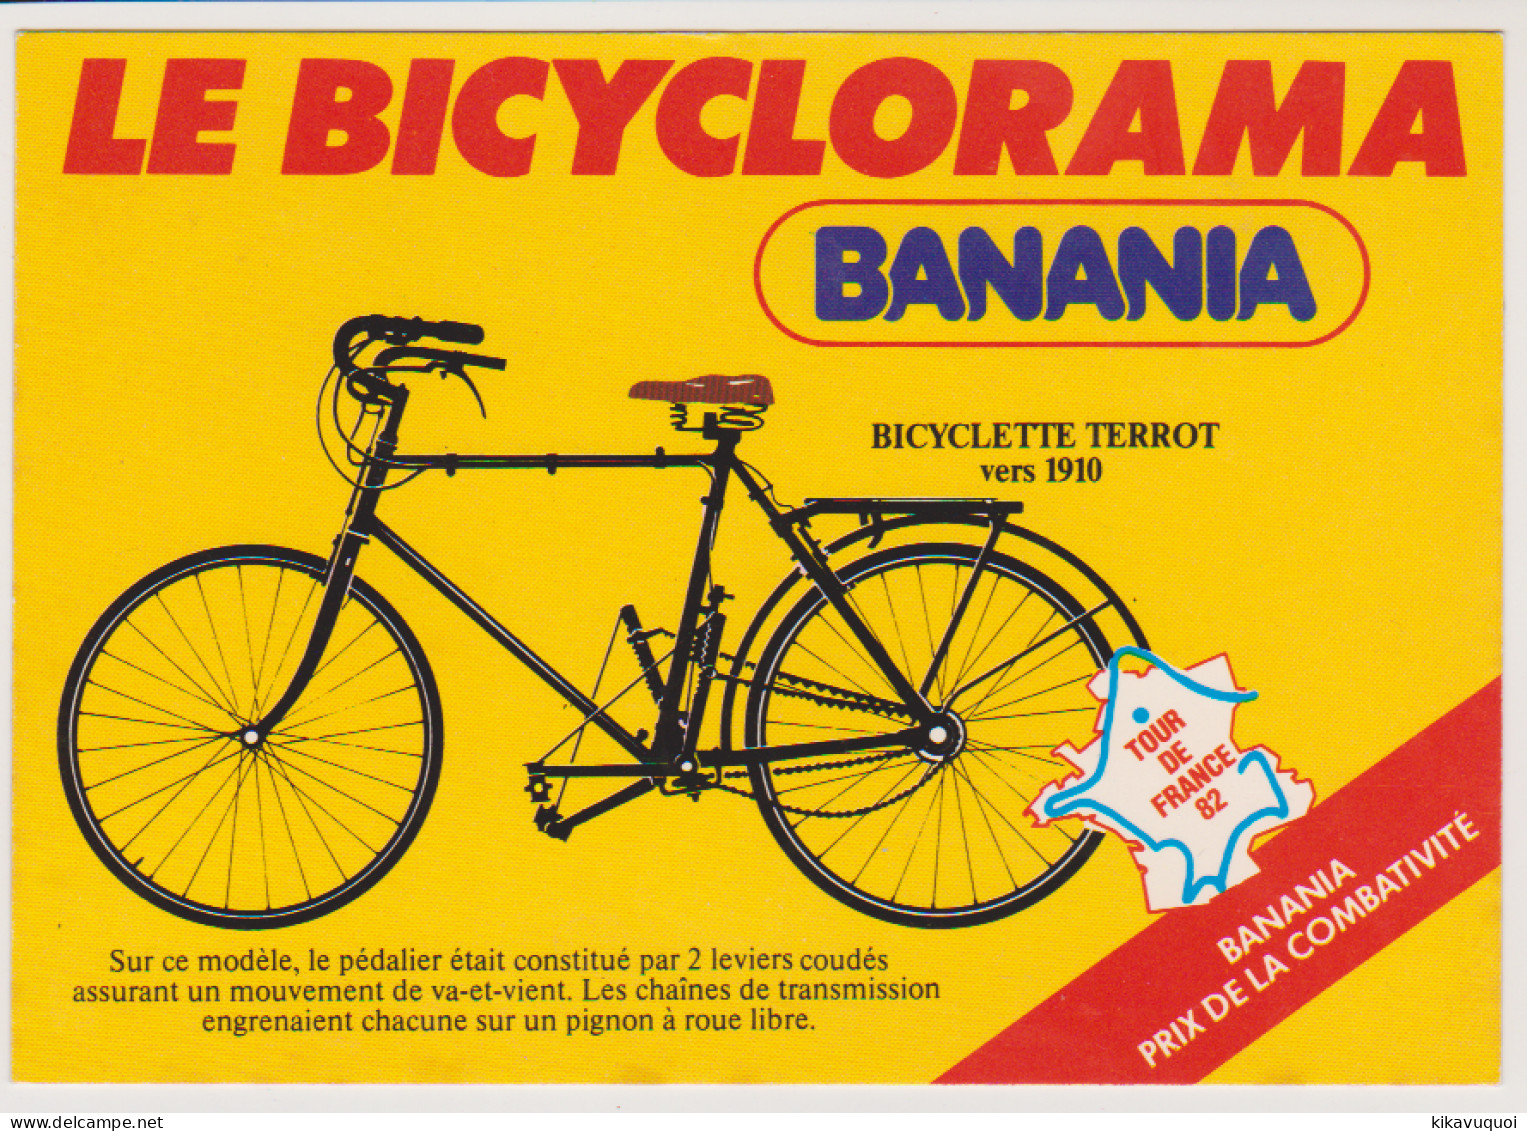 BANANIA -  69eme TOUR DE FRANCE - LE BICYCLORAMA - VELO - CYCLE - CARTE POSTALE ANCIENNE - Moto